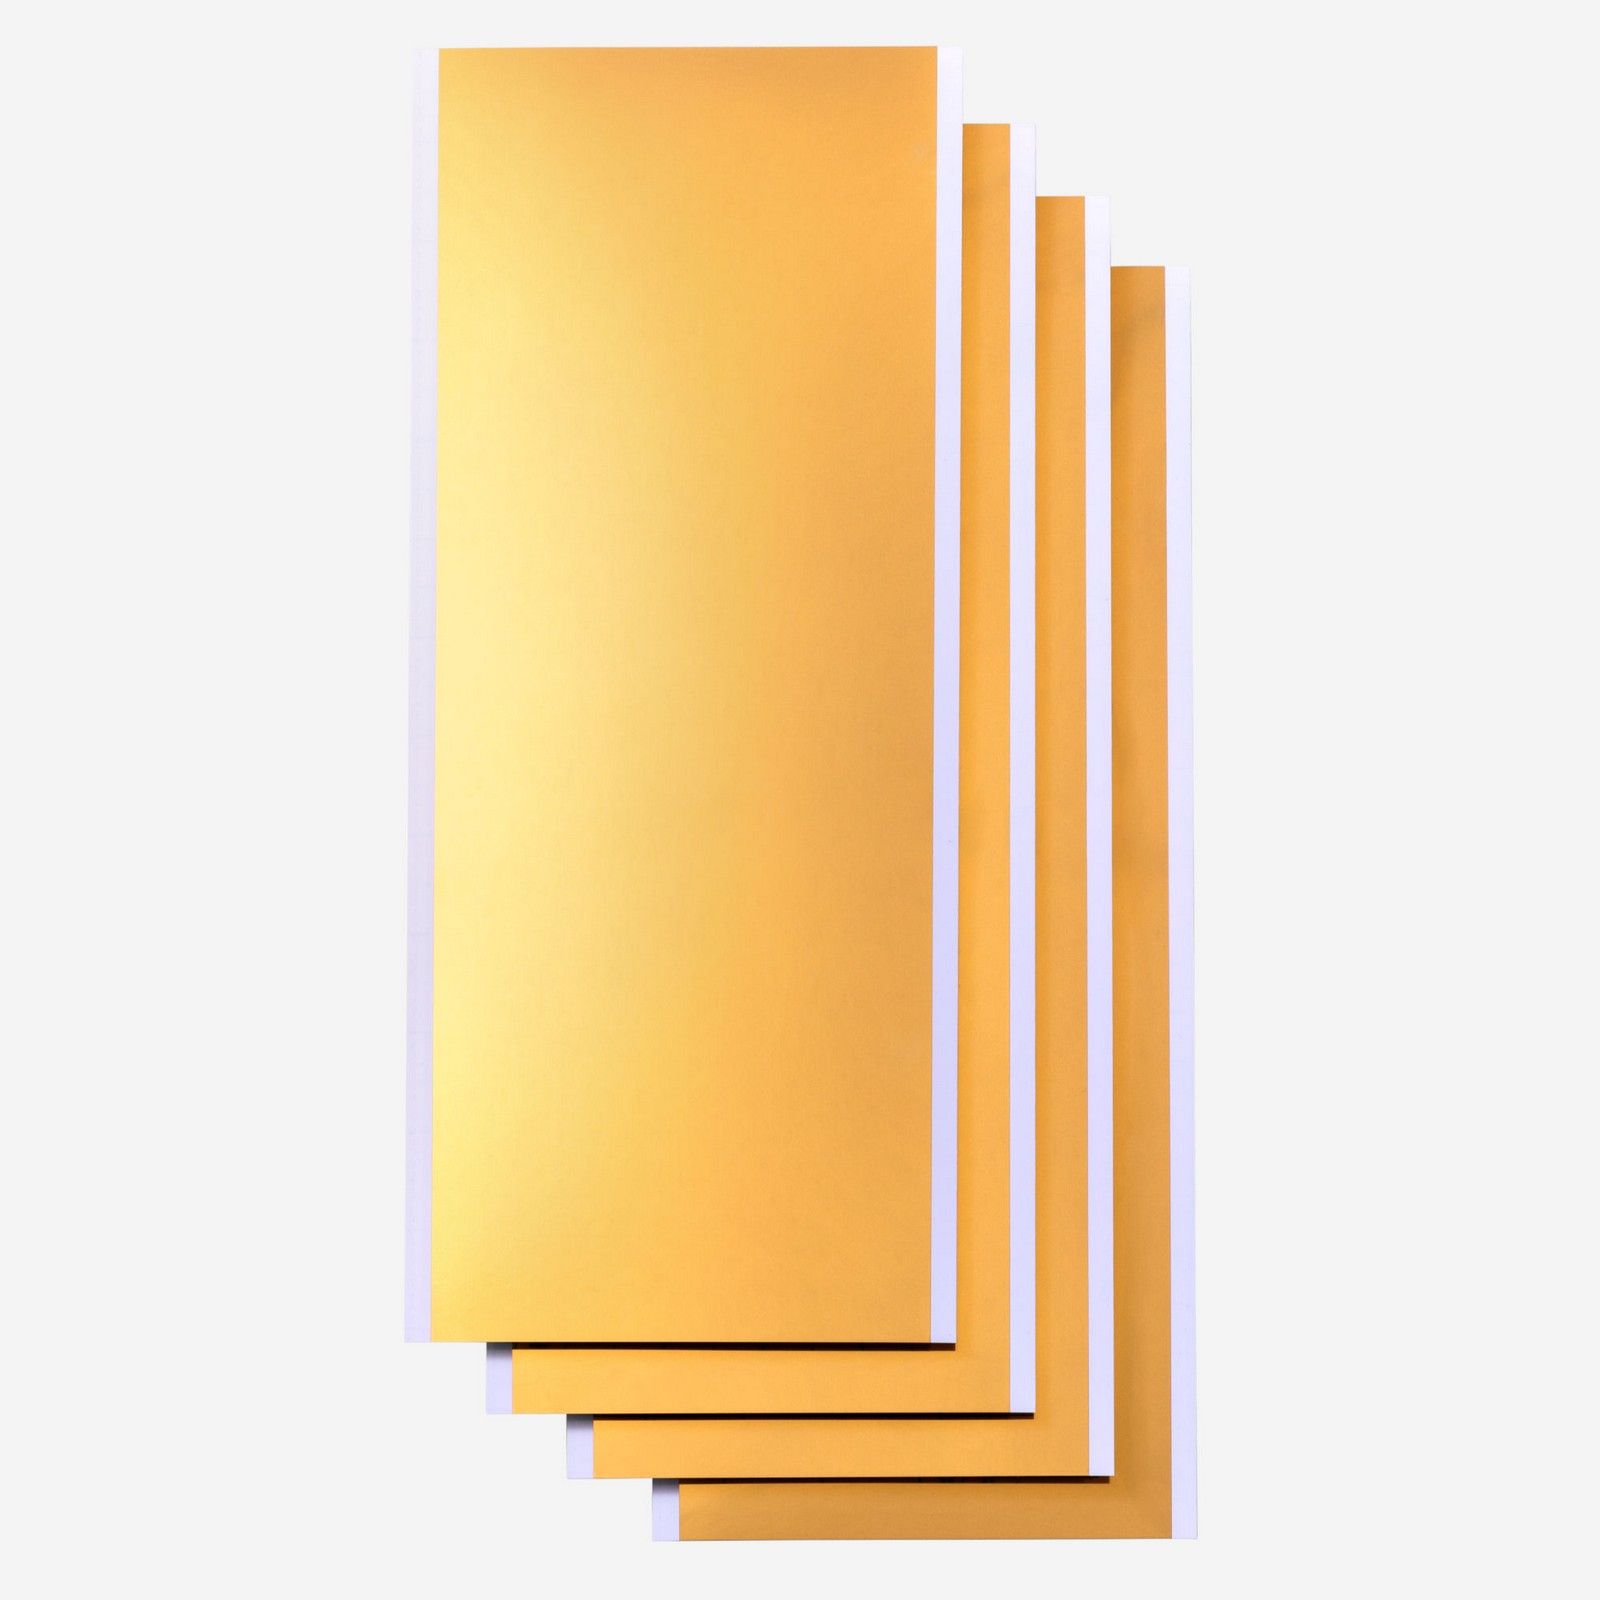 Cricut Joy Permanent Smart Vinyl - Shimmer - Gold